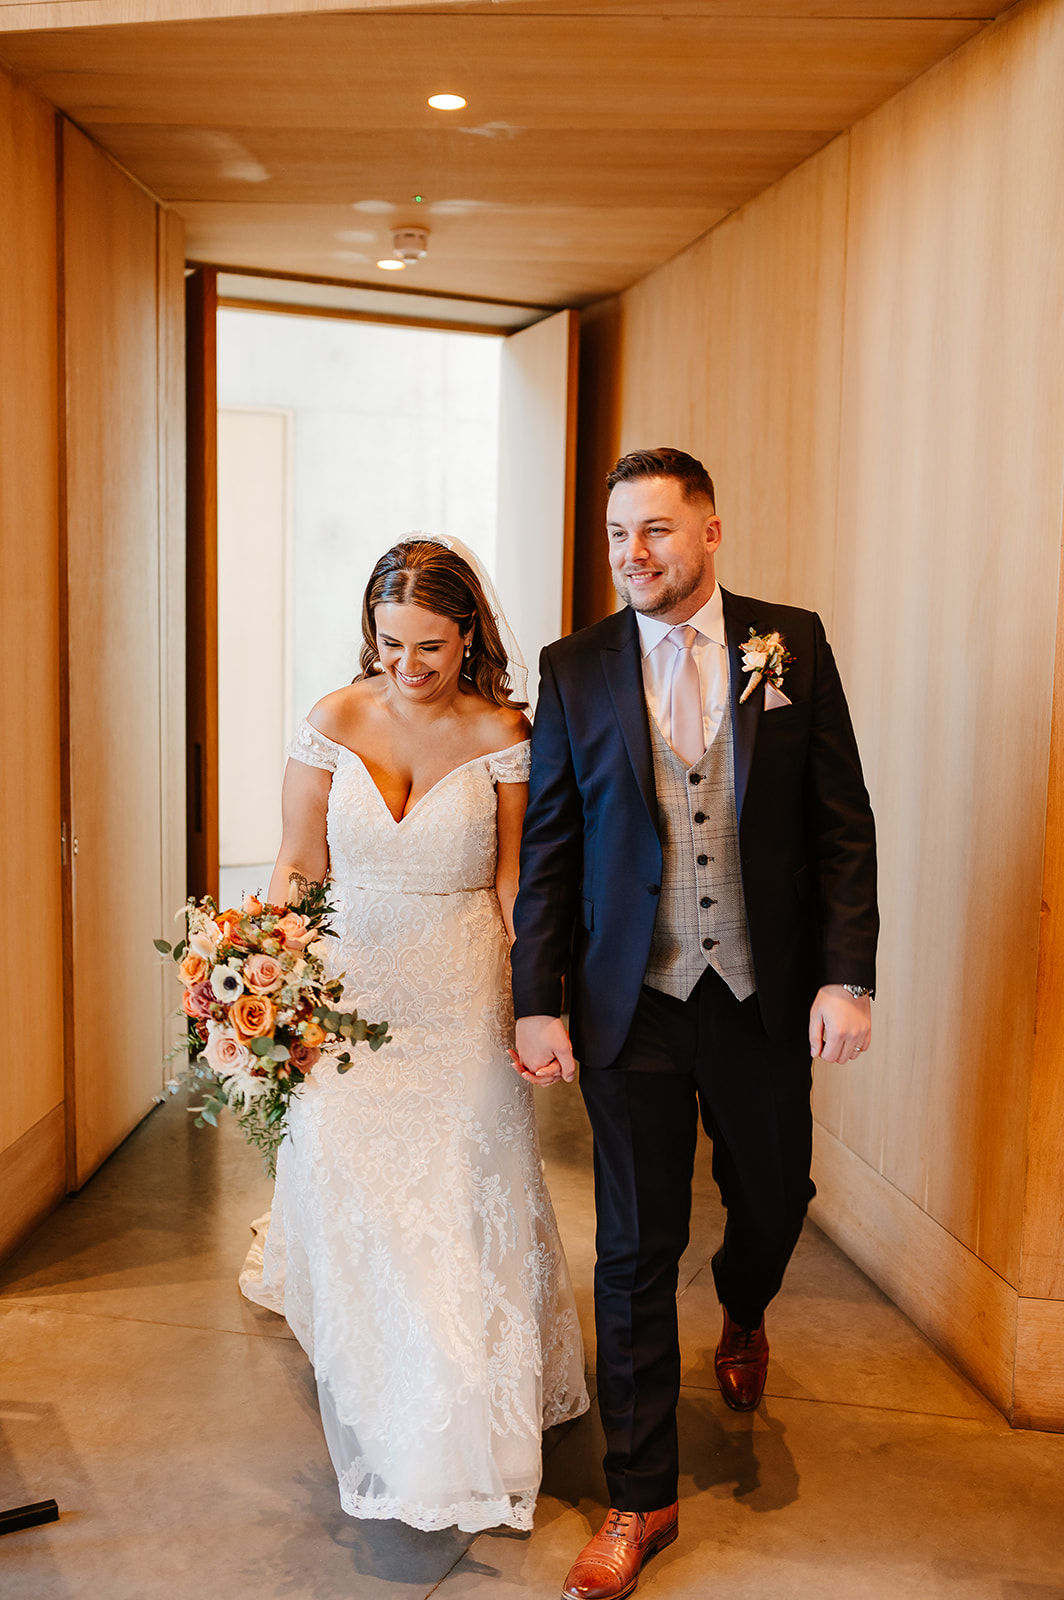 Bride and groom enter room